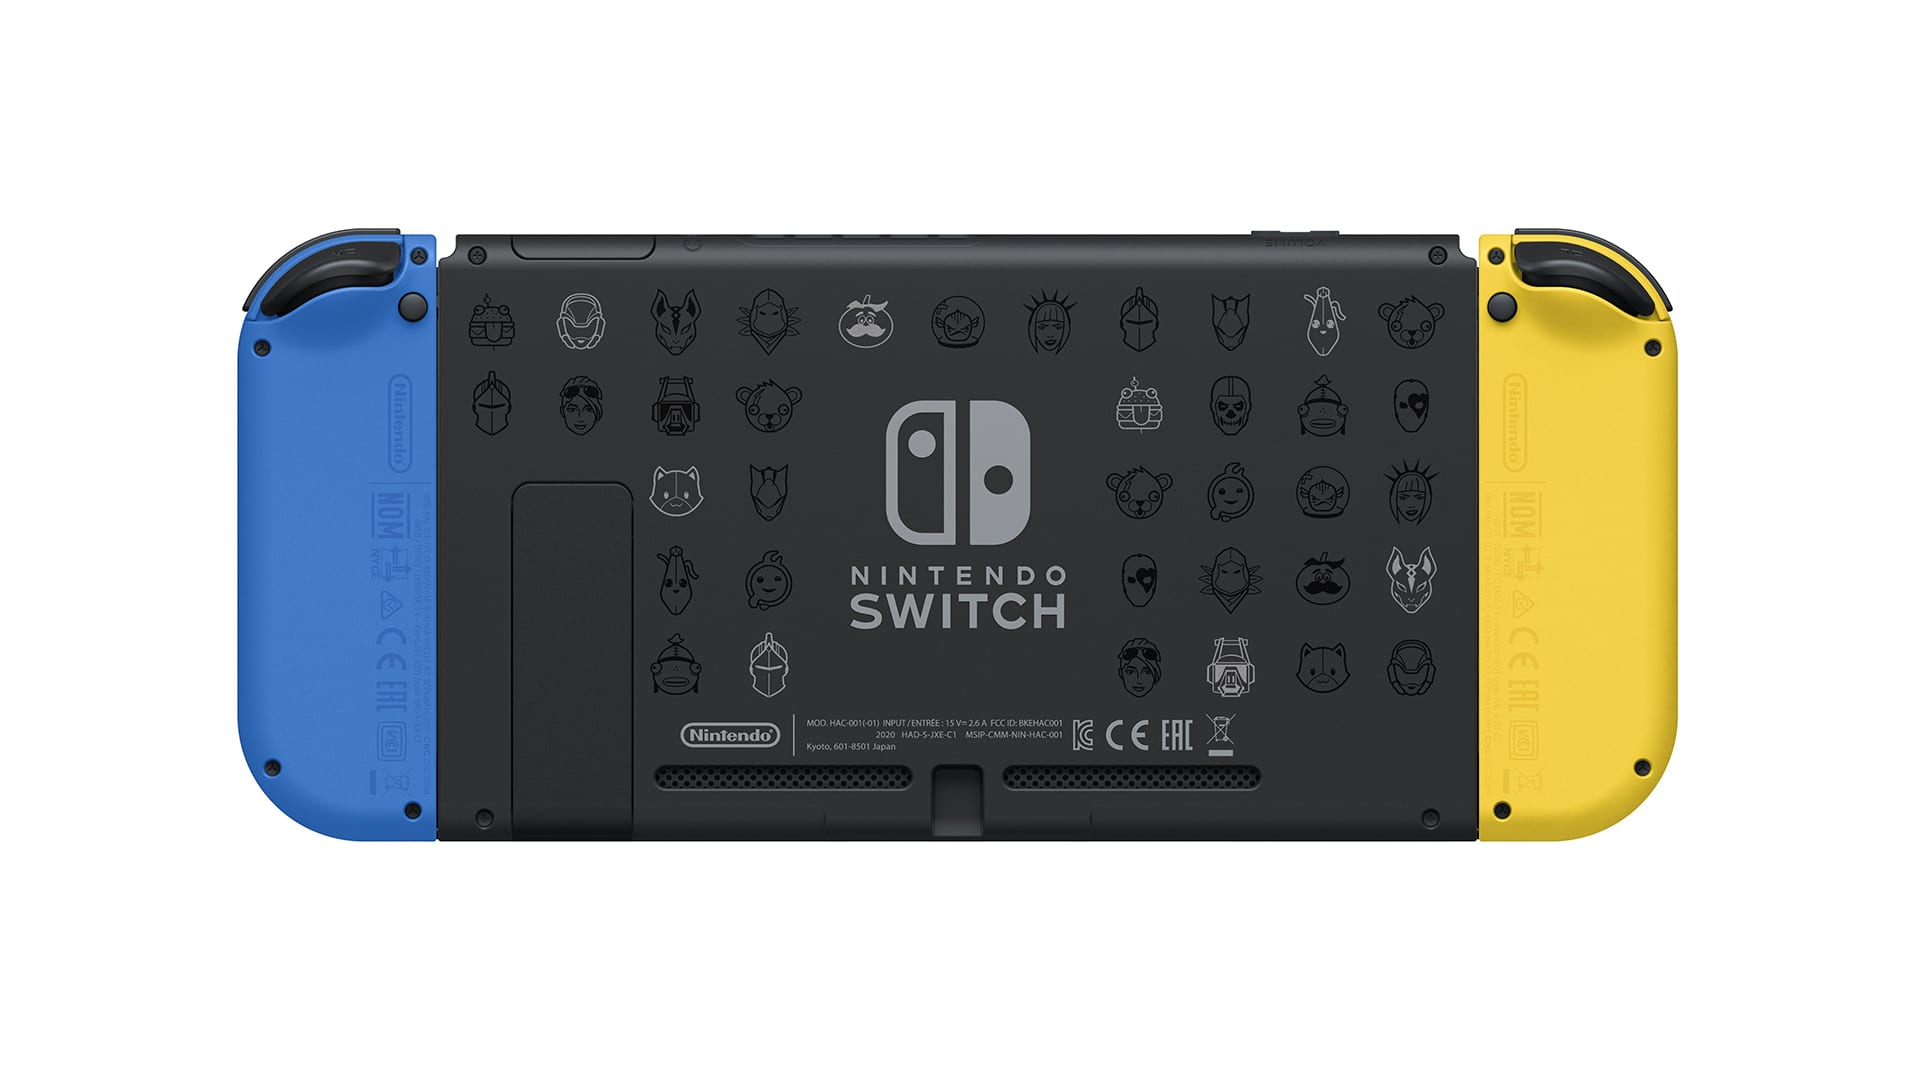 Nintendo Switch - Design